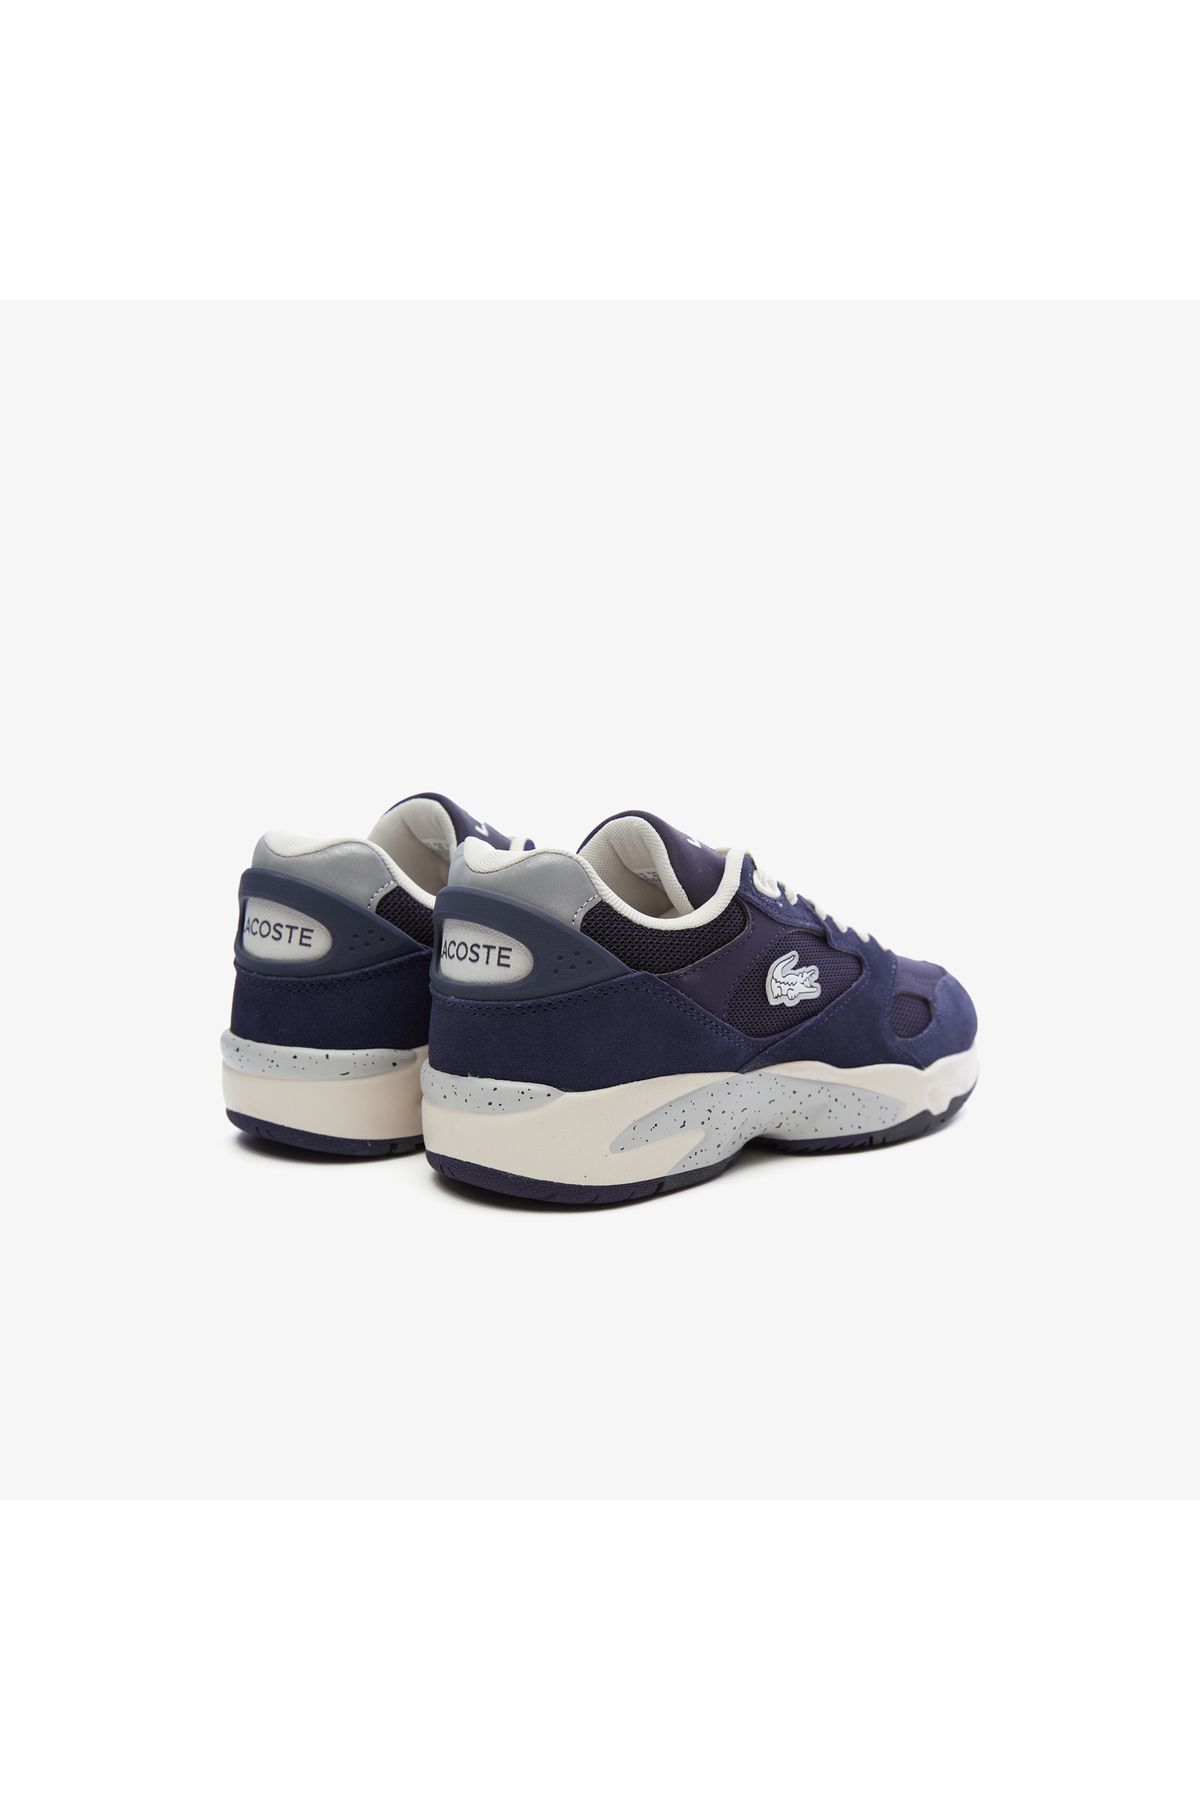 Lacoste Storm 96 Lo Vintage Men's Navy Blue Sneaker